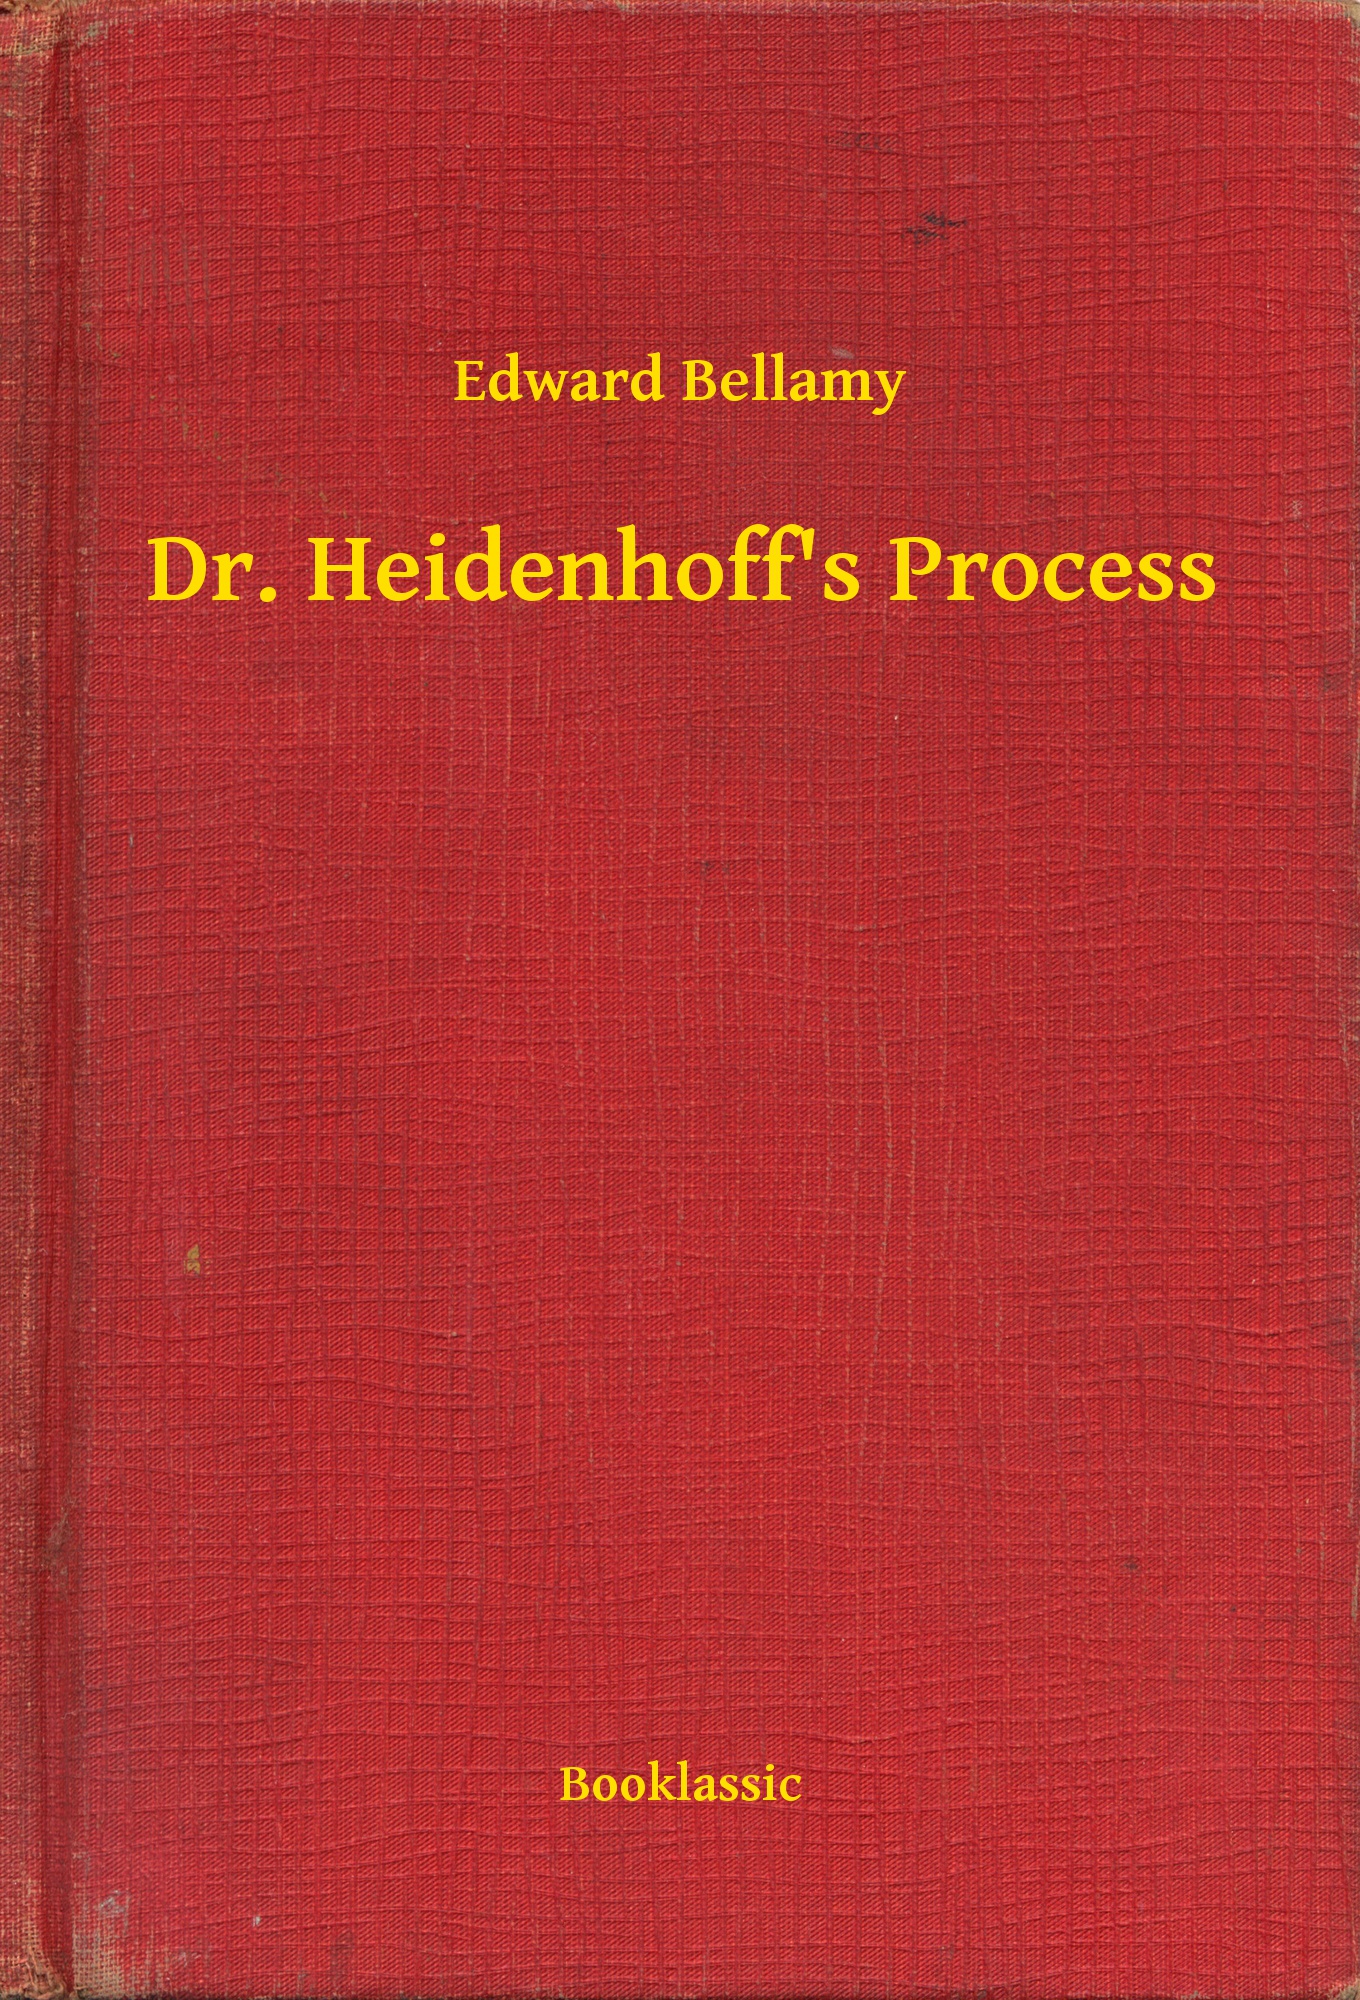 Dr. Heidenhoff"s Process